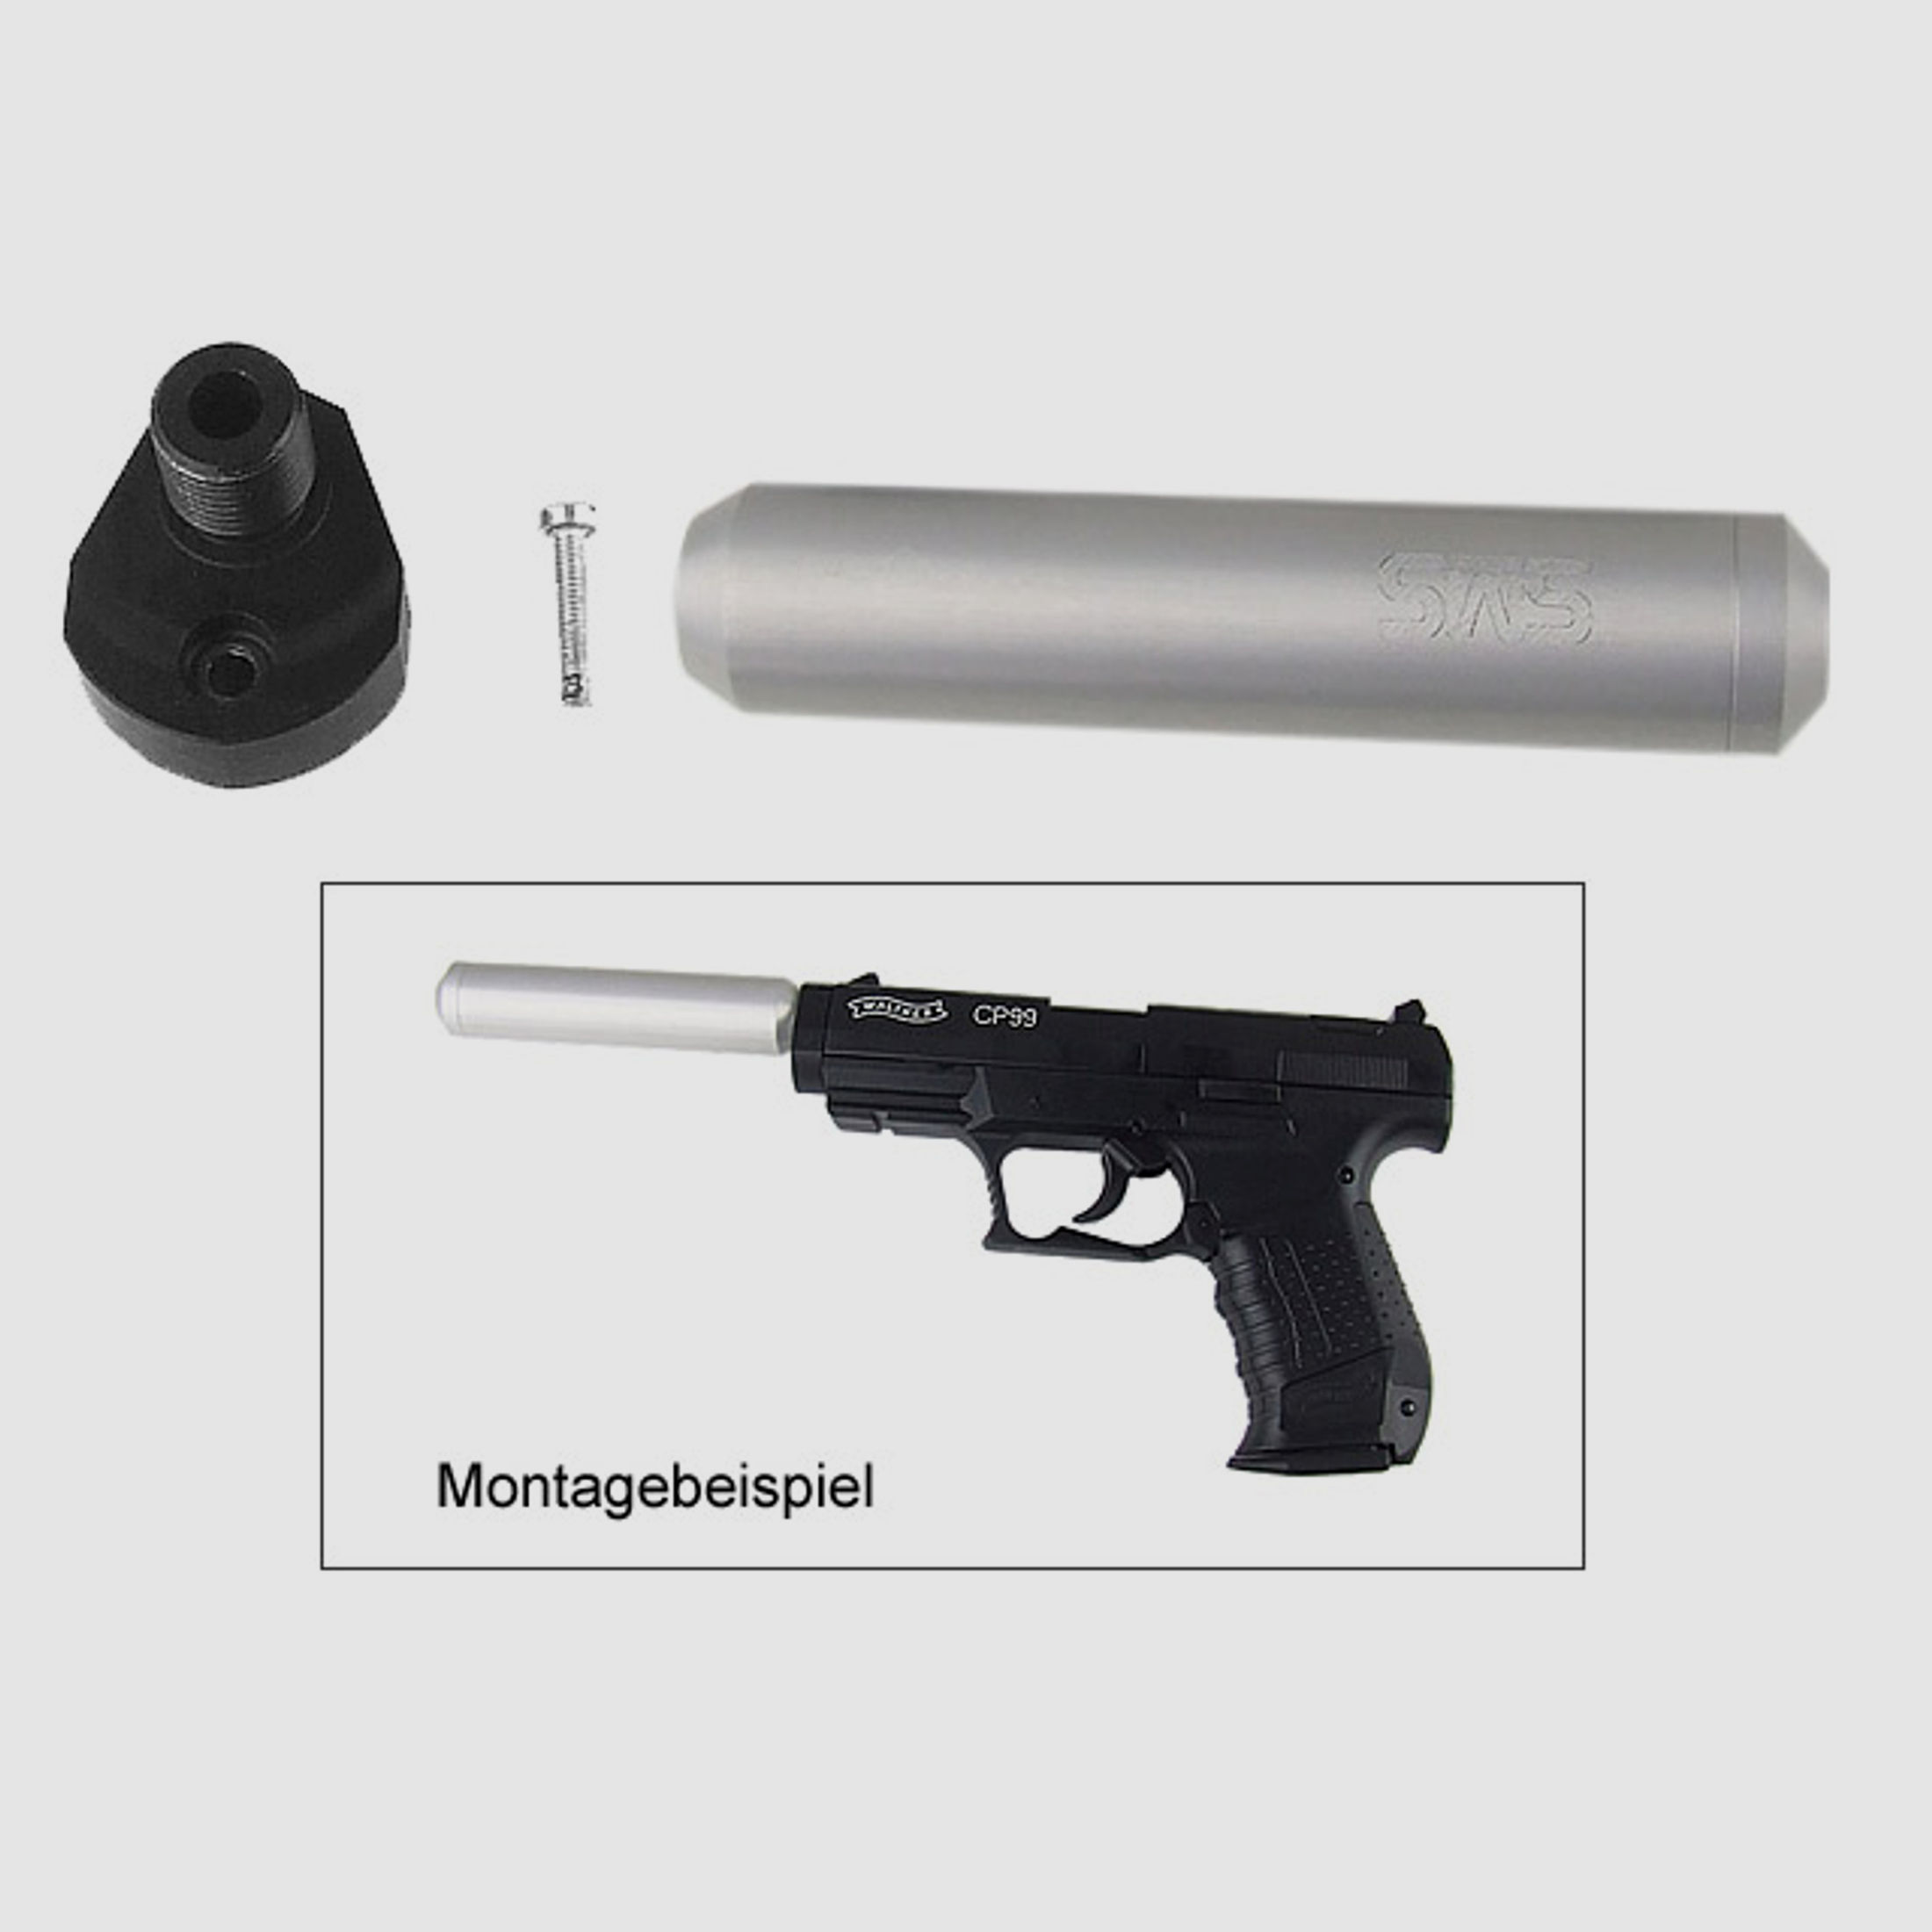 Adapter und silberner SchalldĂ¤mpfer fĂĽr CO2 Pistole Walther CP99 (P18)